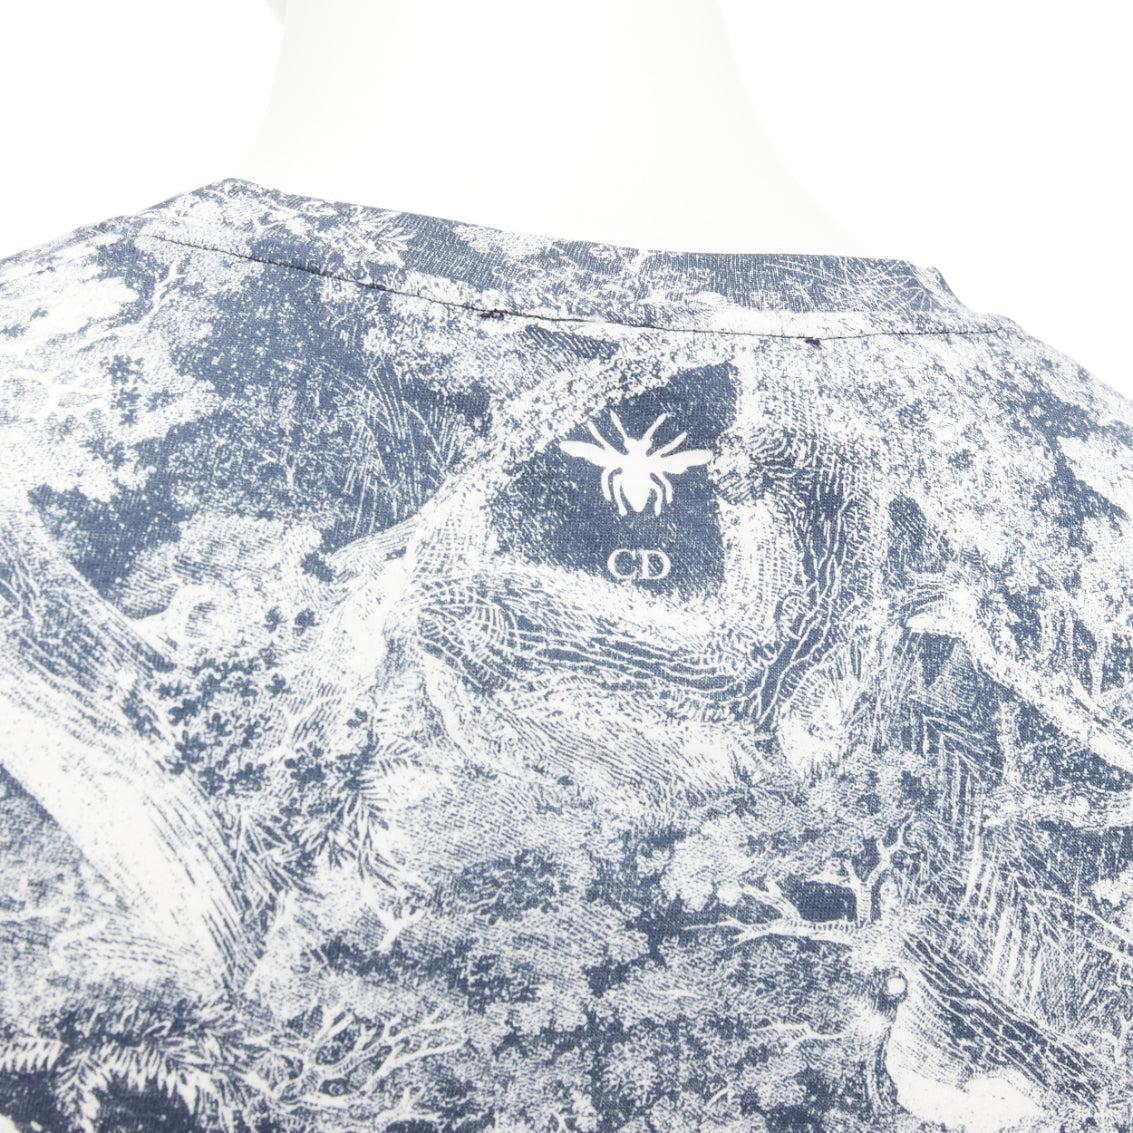 DIOR Toile De Jouy navy white tree tiger print cotton linen casual tshirt XS
Reference: AAWC/A00775
Brand: Dior
Designer: Maria Grazia Chiuri
Material: Cotton, Linen
Color: Navy, White
Pattern: Photographic Print
Closure: Slip On
Made in: